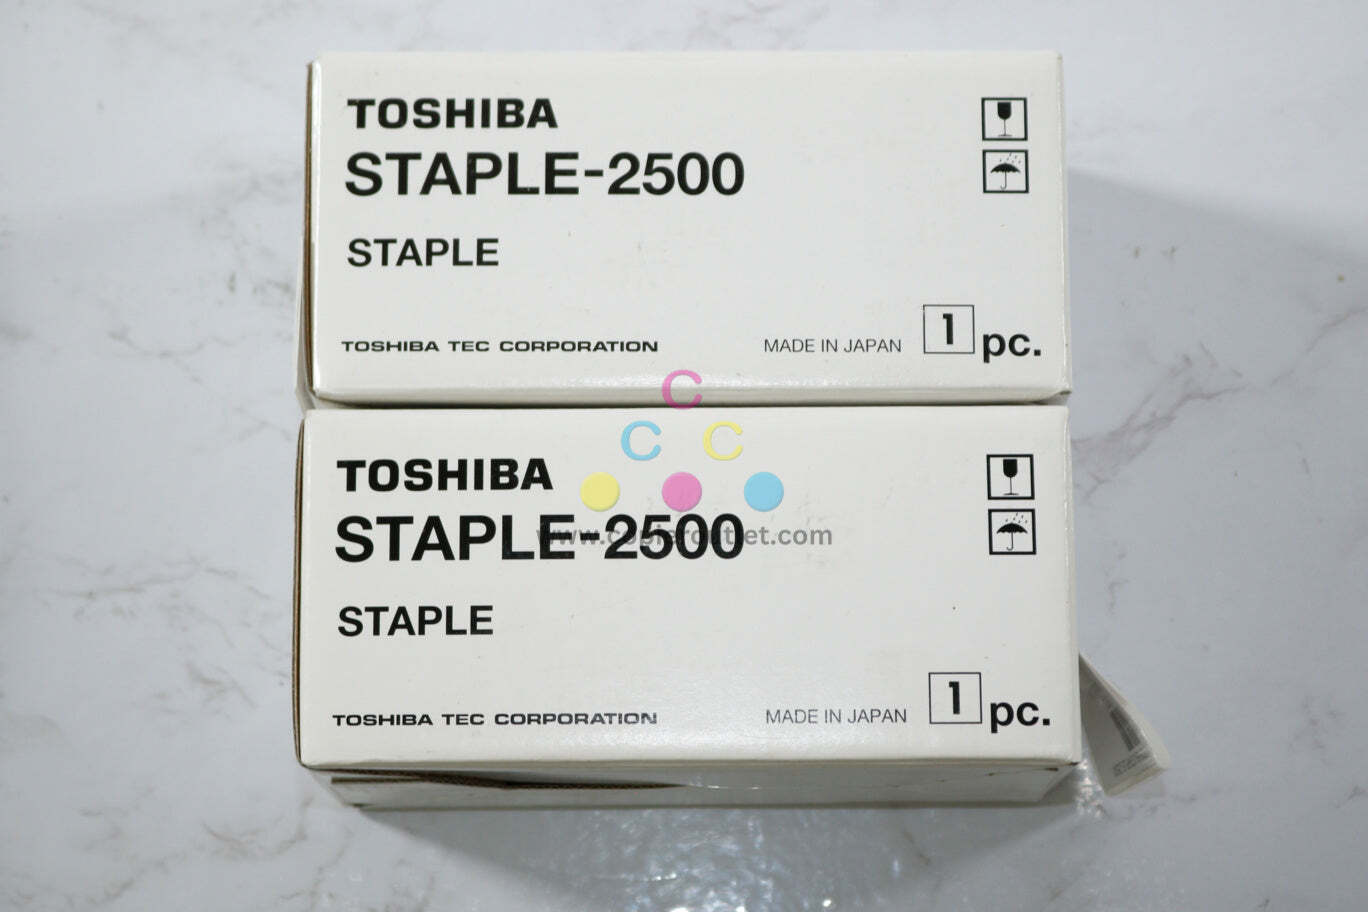 2 New OEM Toshiba SR5000,SR5020,SR4110 Staple-2500 Cartridge 318332 1pc.